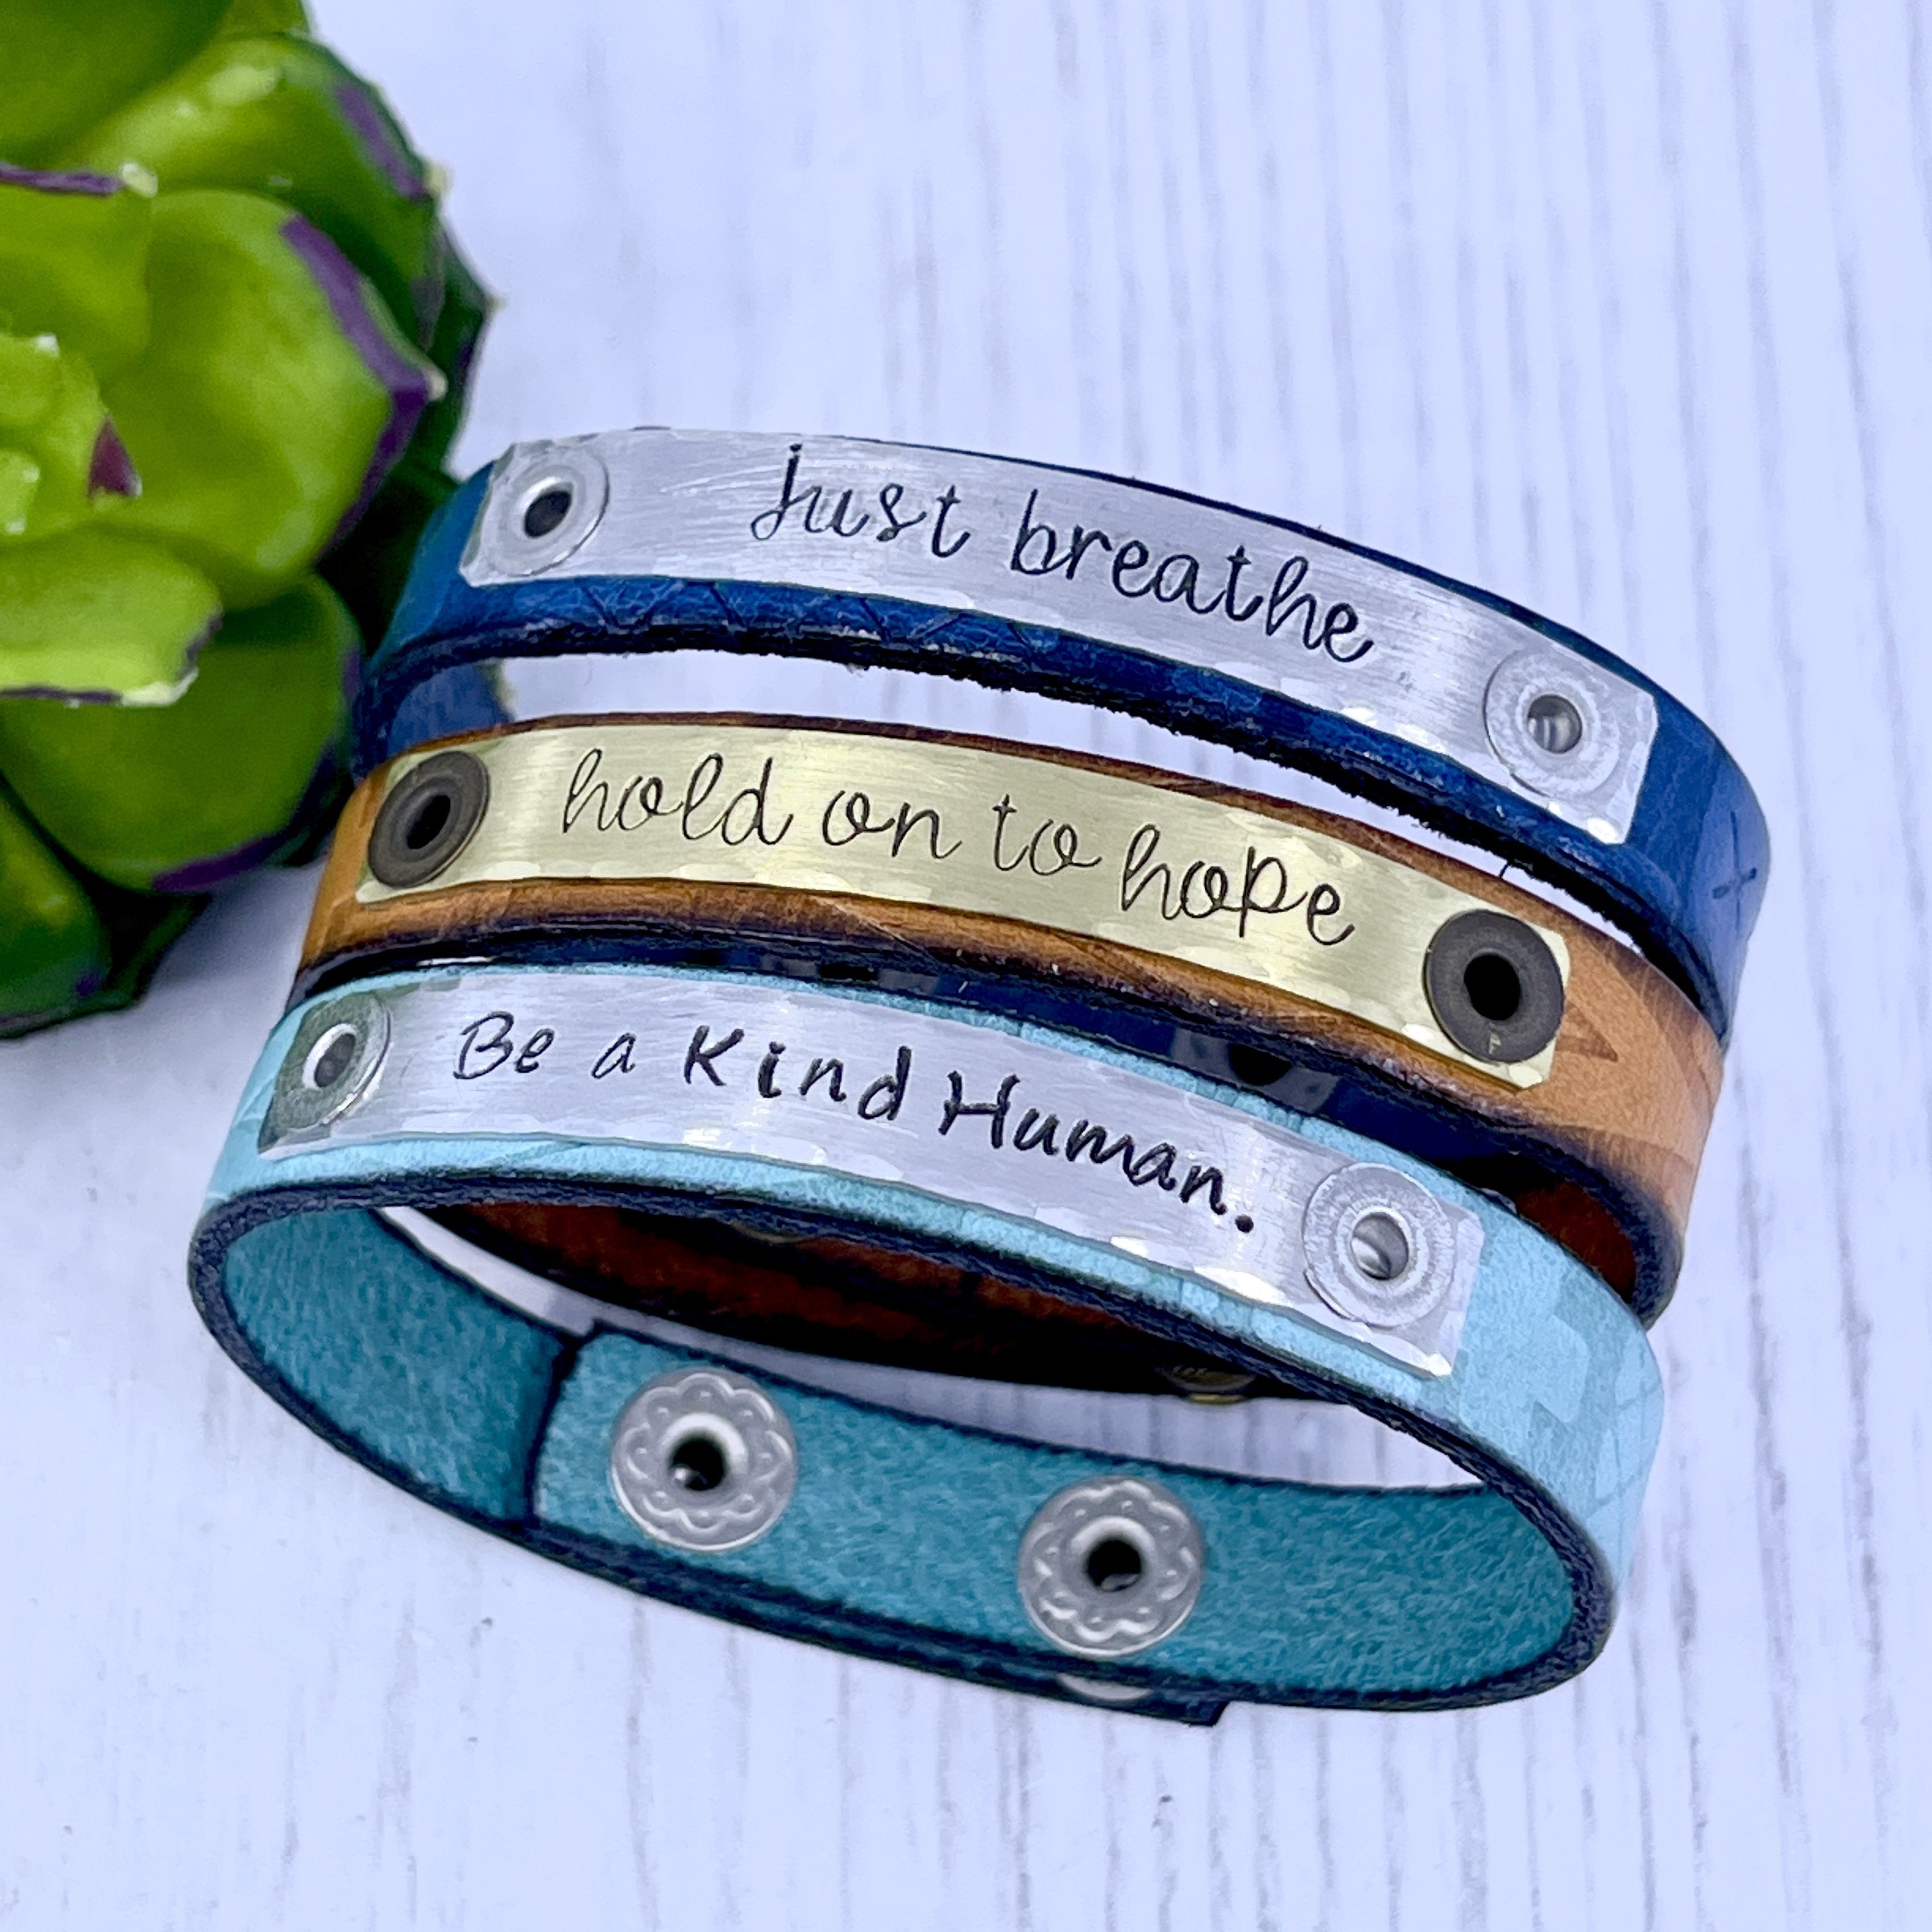 HOLD ON TO HOPE Southwest Leather Skinny Bracelet | 4 colors | Adjustable Skinny Bracelets Create Hope Cuffs 